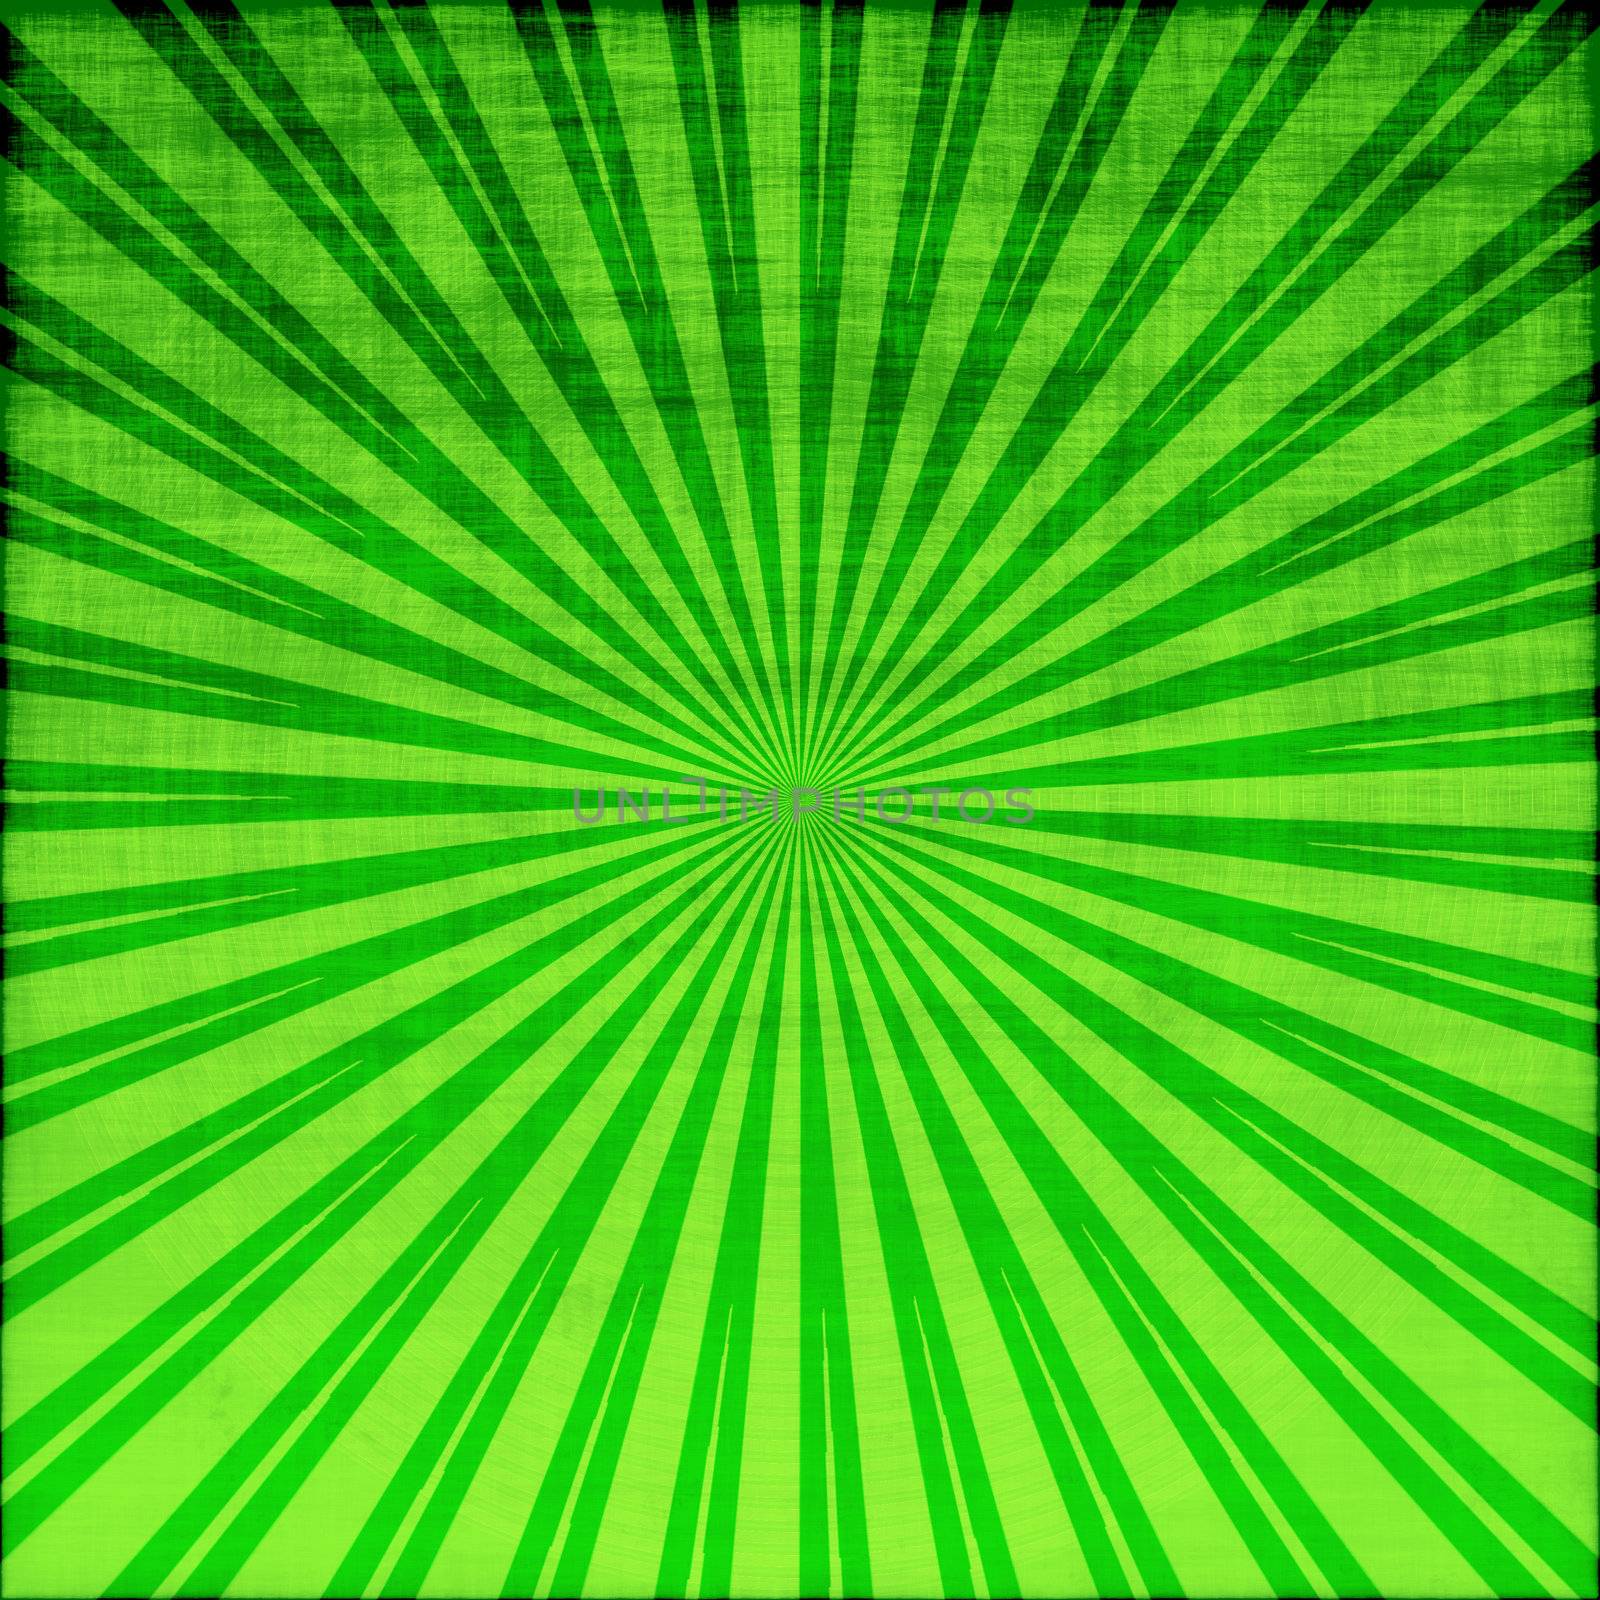 grunge starburst in green by nadil